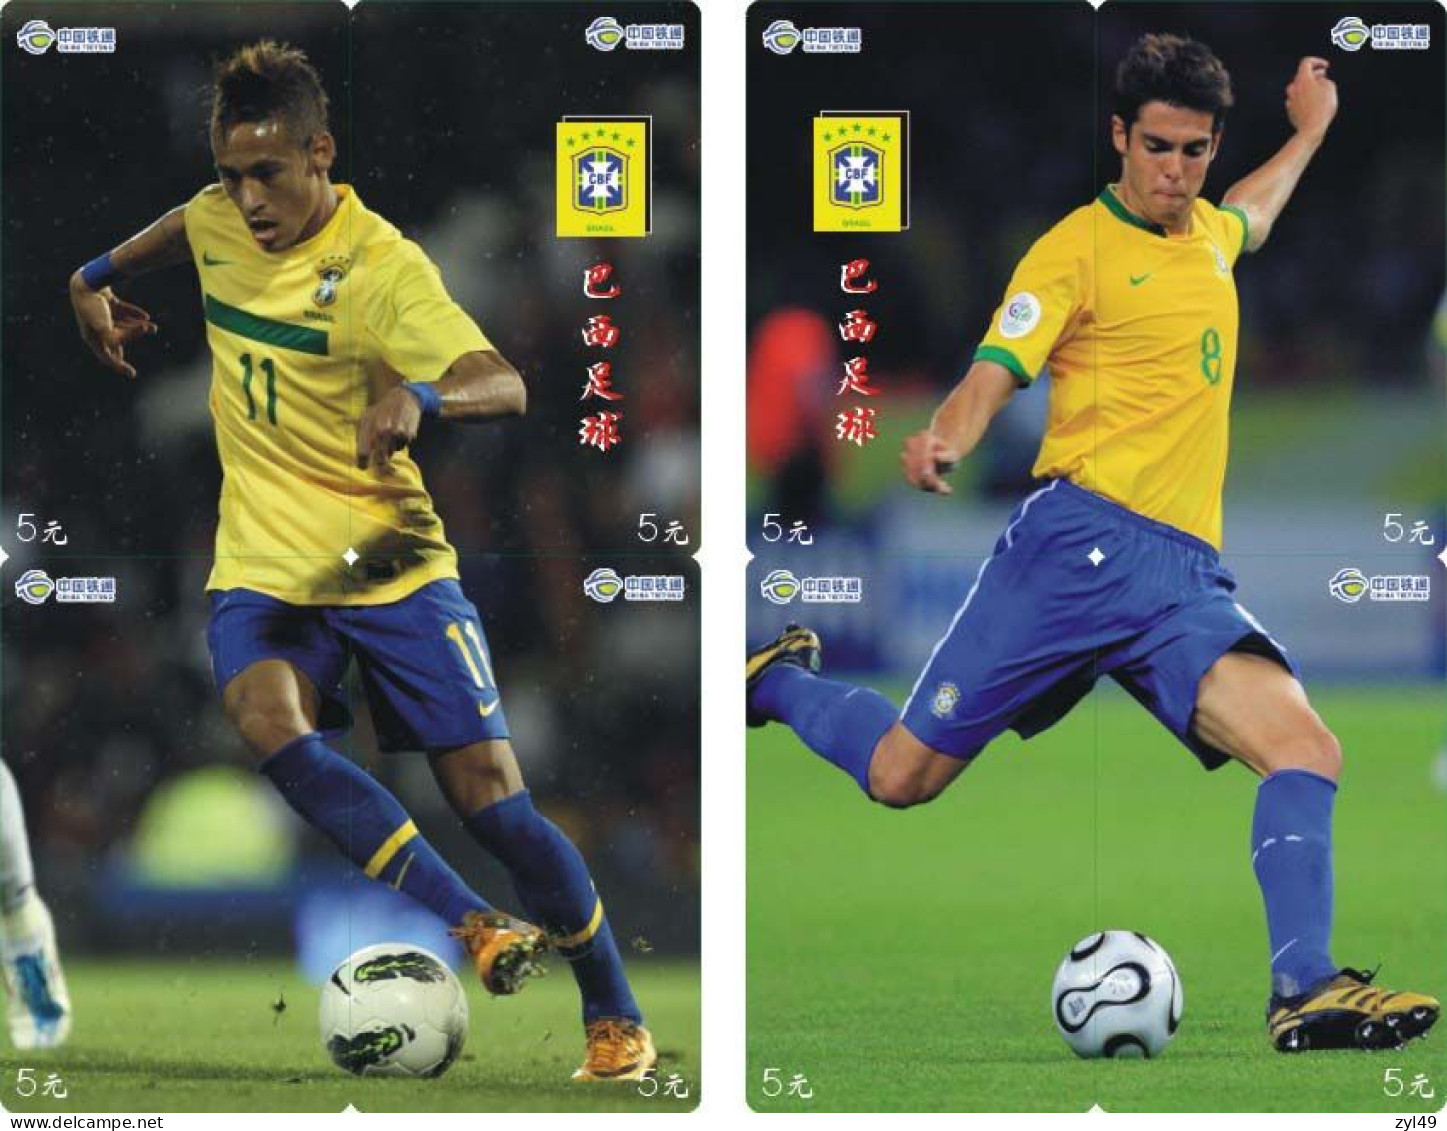 F13009 China phone cards Brazil Football 169pcs